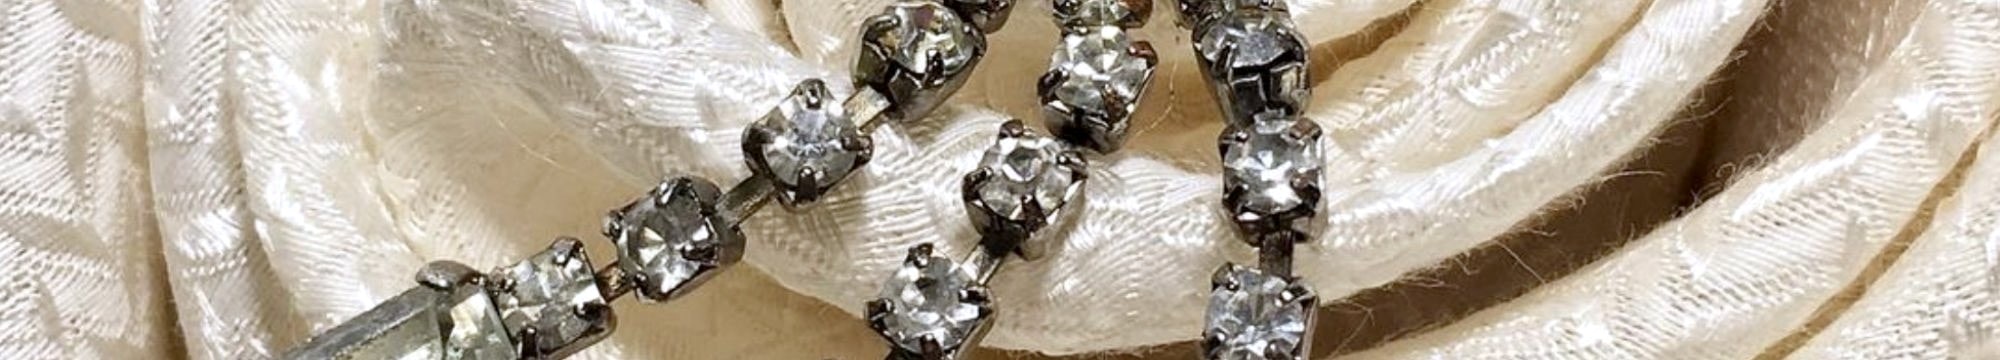 bijoux-anciens-stass-perles-broches-epinge-a-cravatte